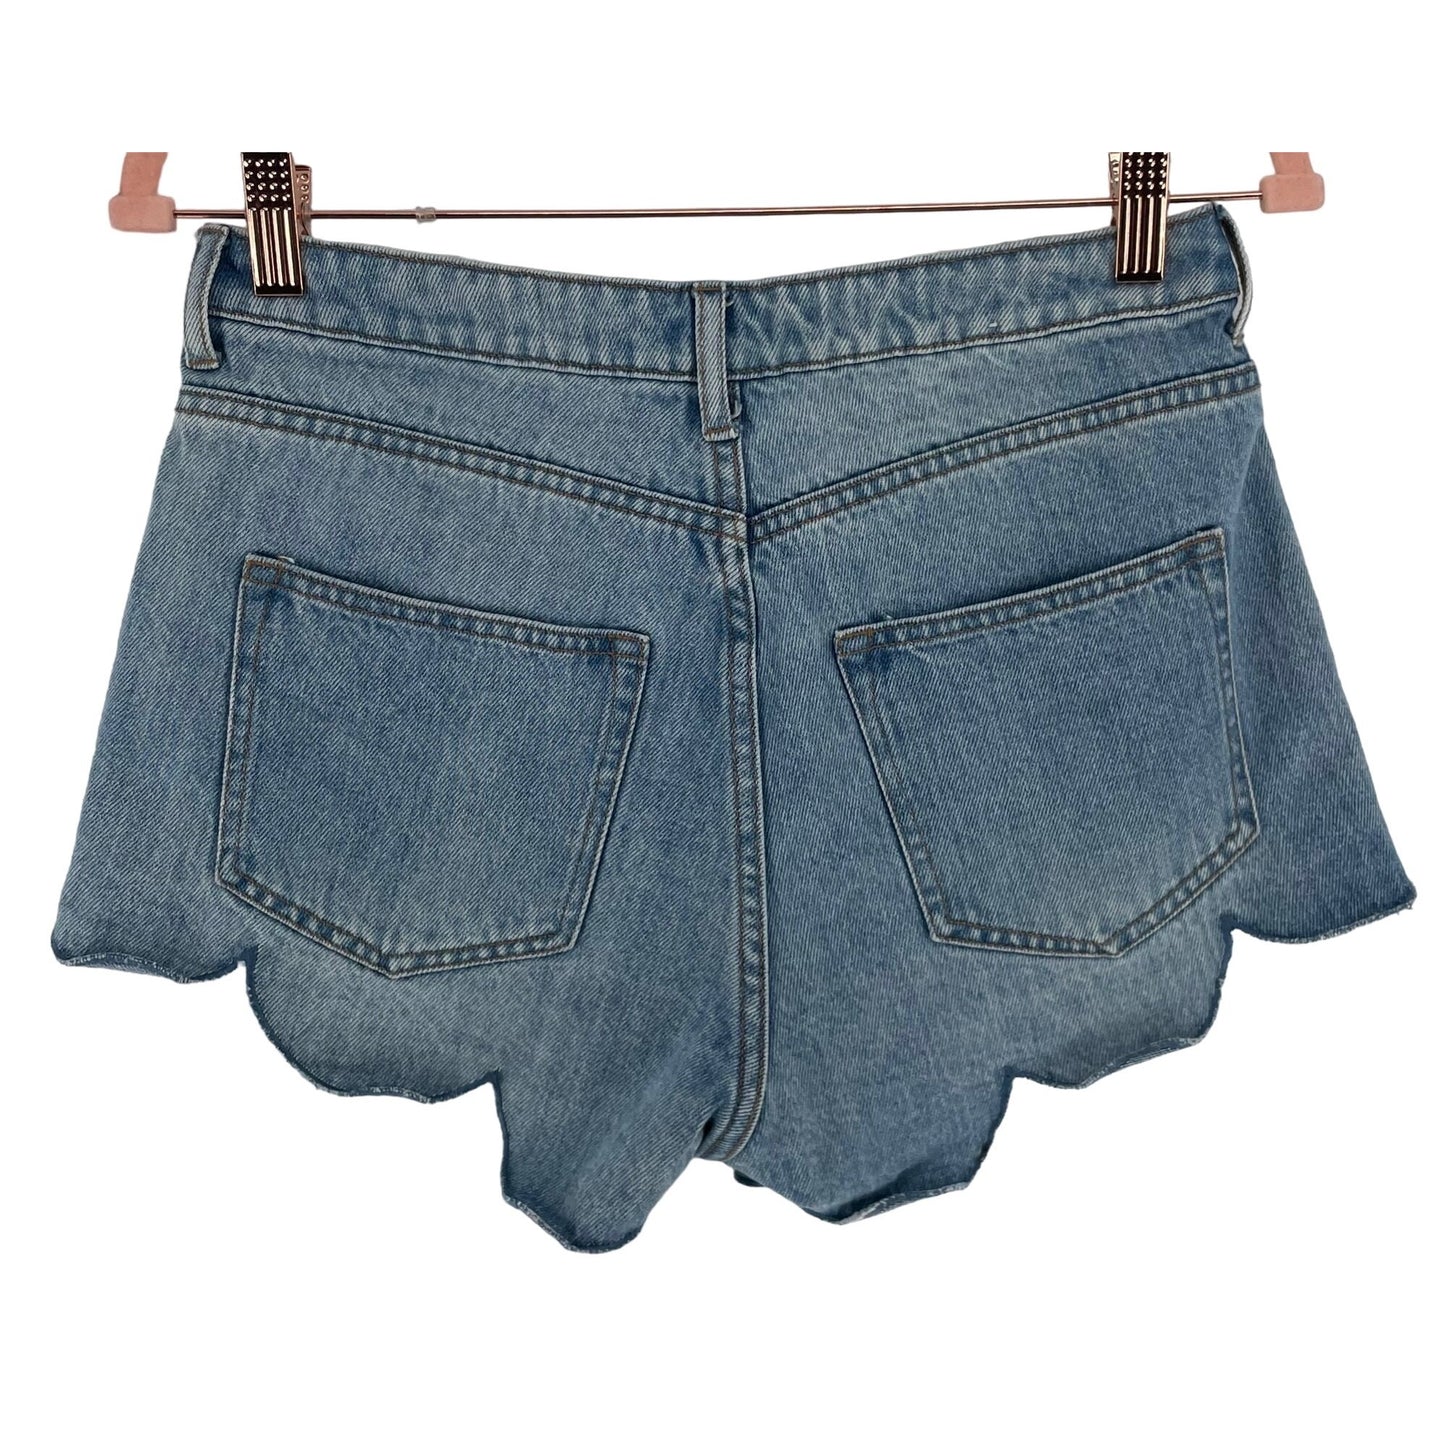 H&M Women's Size 6 Light Wash Whiskered Blue Jean Ruffle Trim Denim Shorts